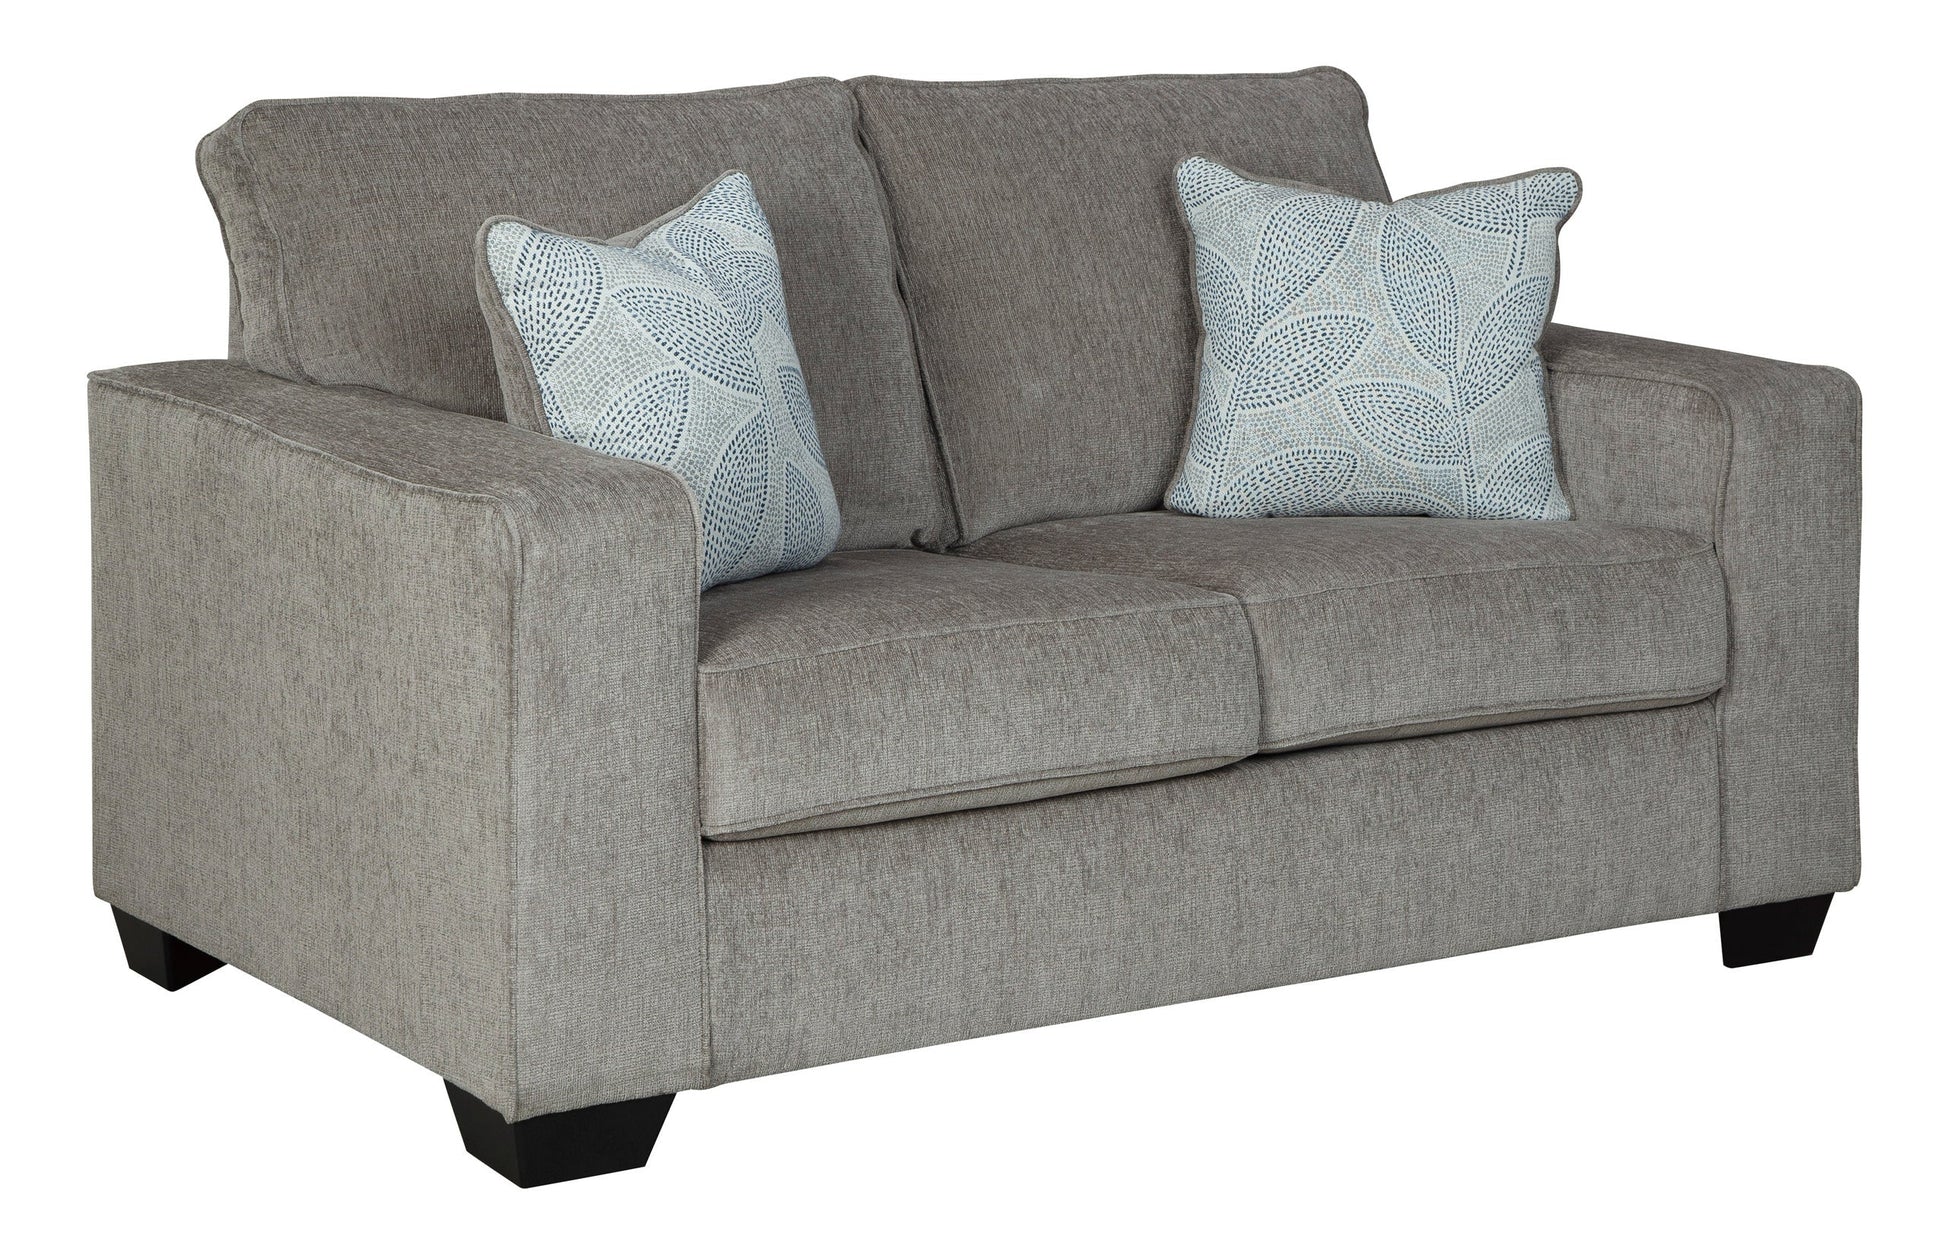 Ashley Altari Alloy Gray Modern Sleek Contemporary Fabric Polyester Upholstered Sofa & Loveseat Set